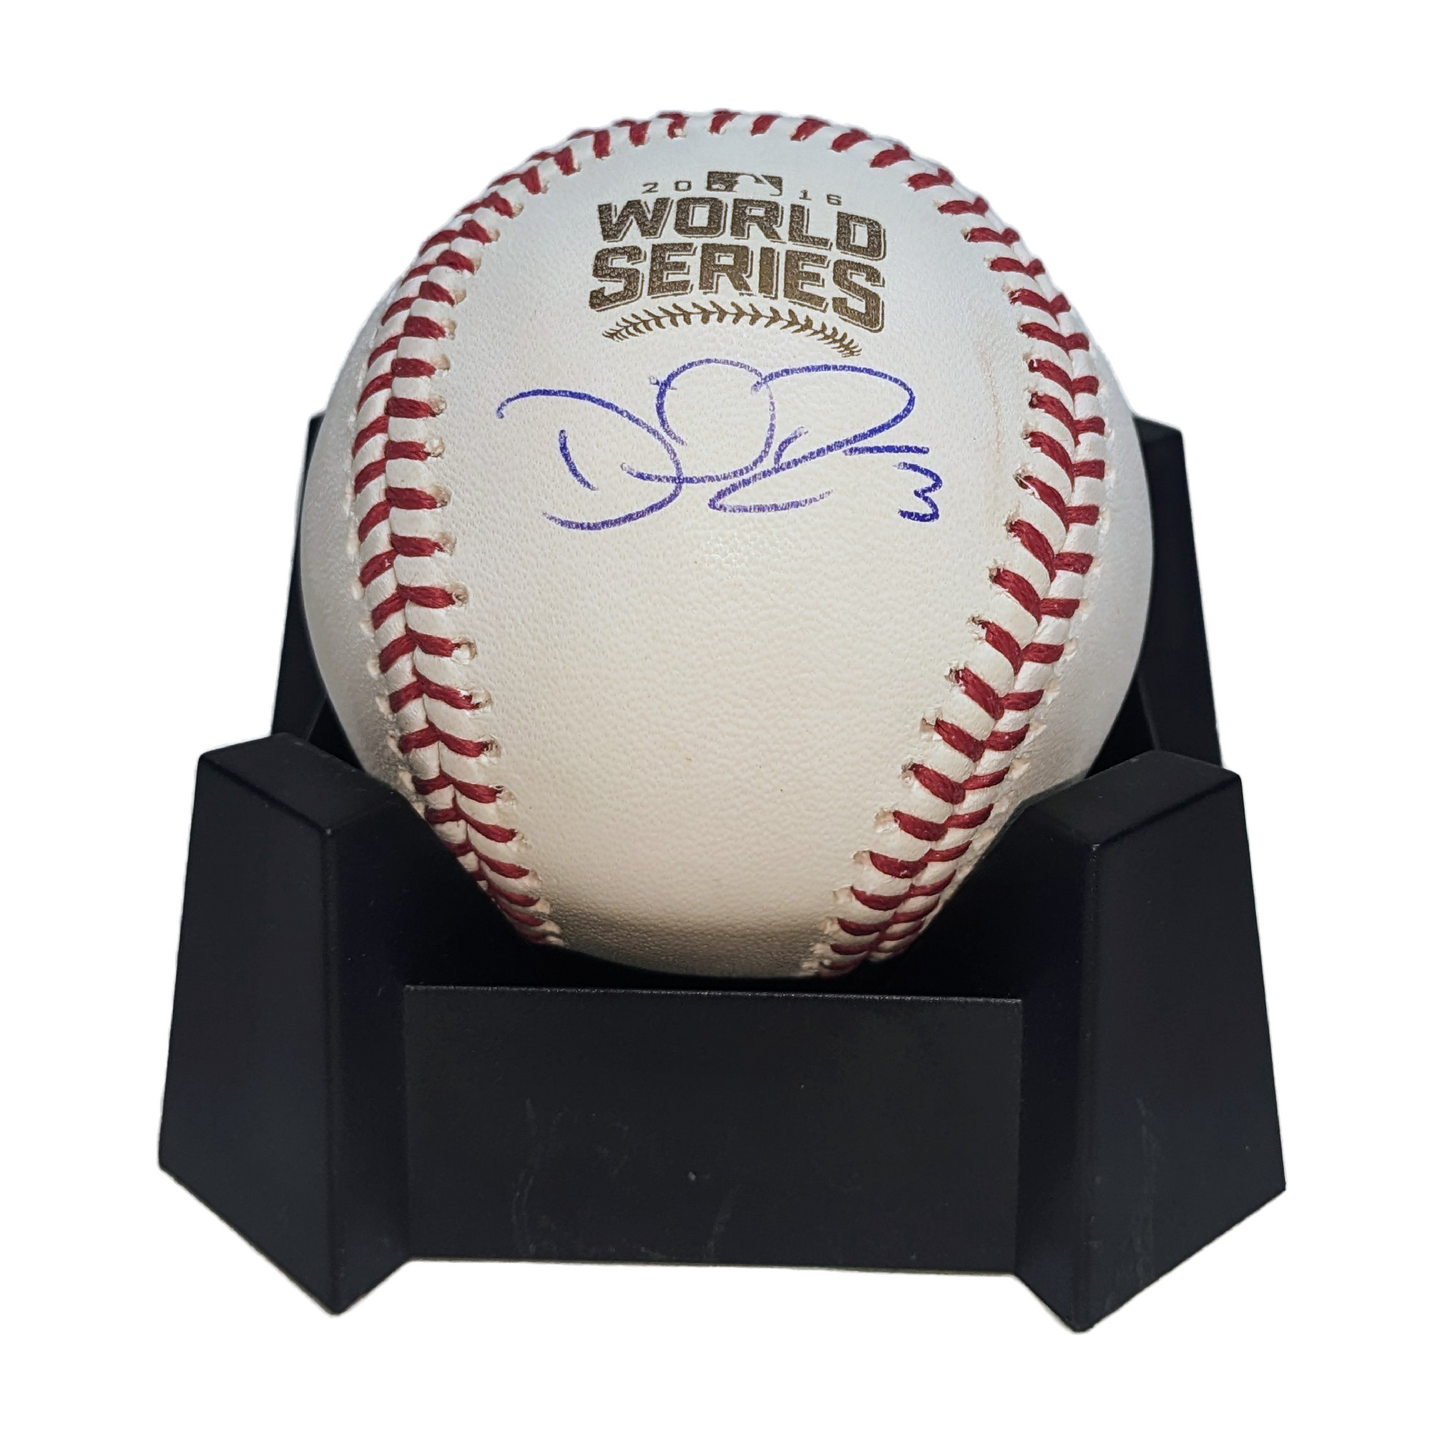 David Ross Autographed Official 2016 World Series Baseball. Beckett Authentication.